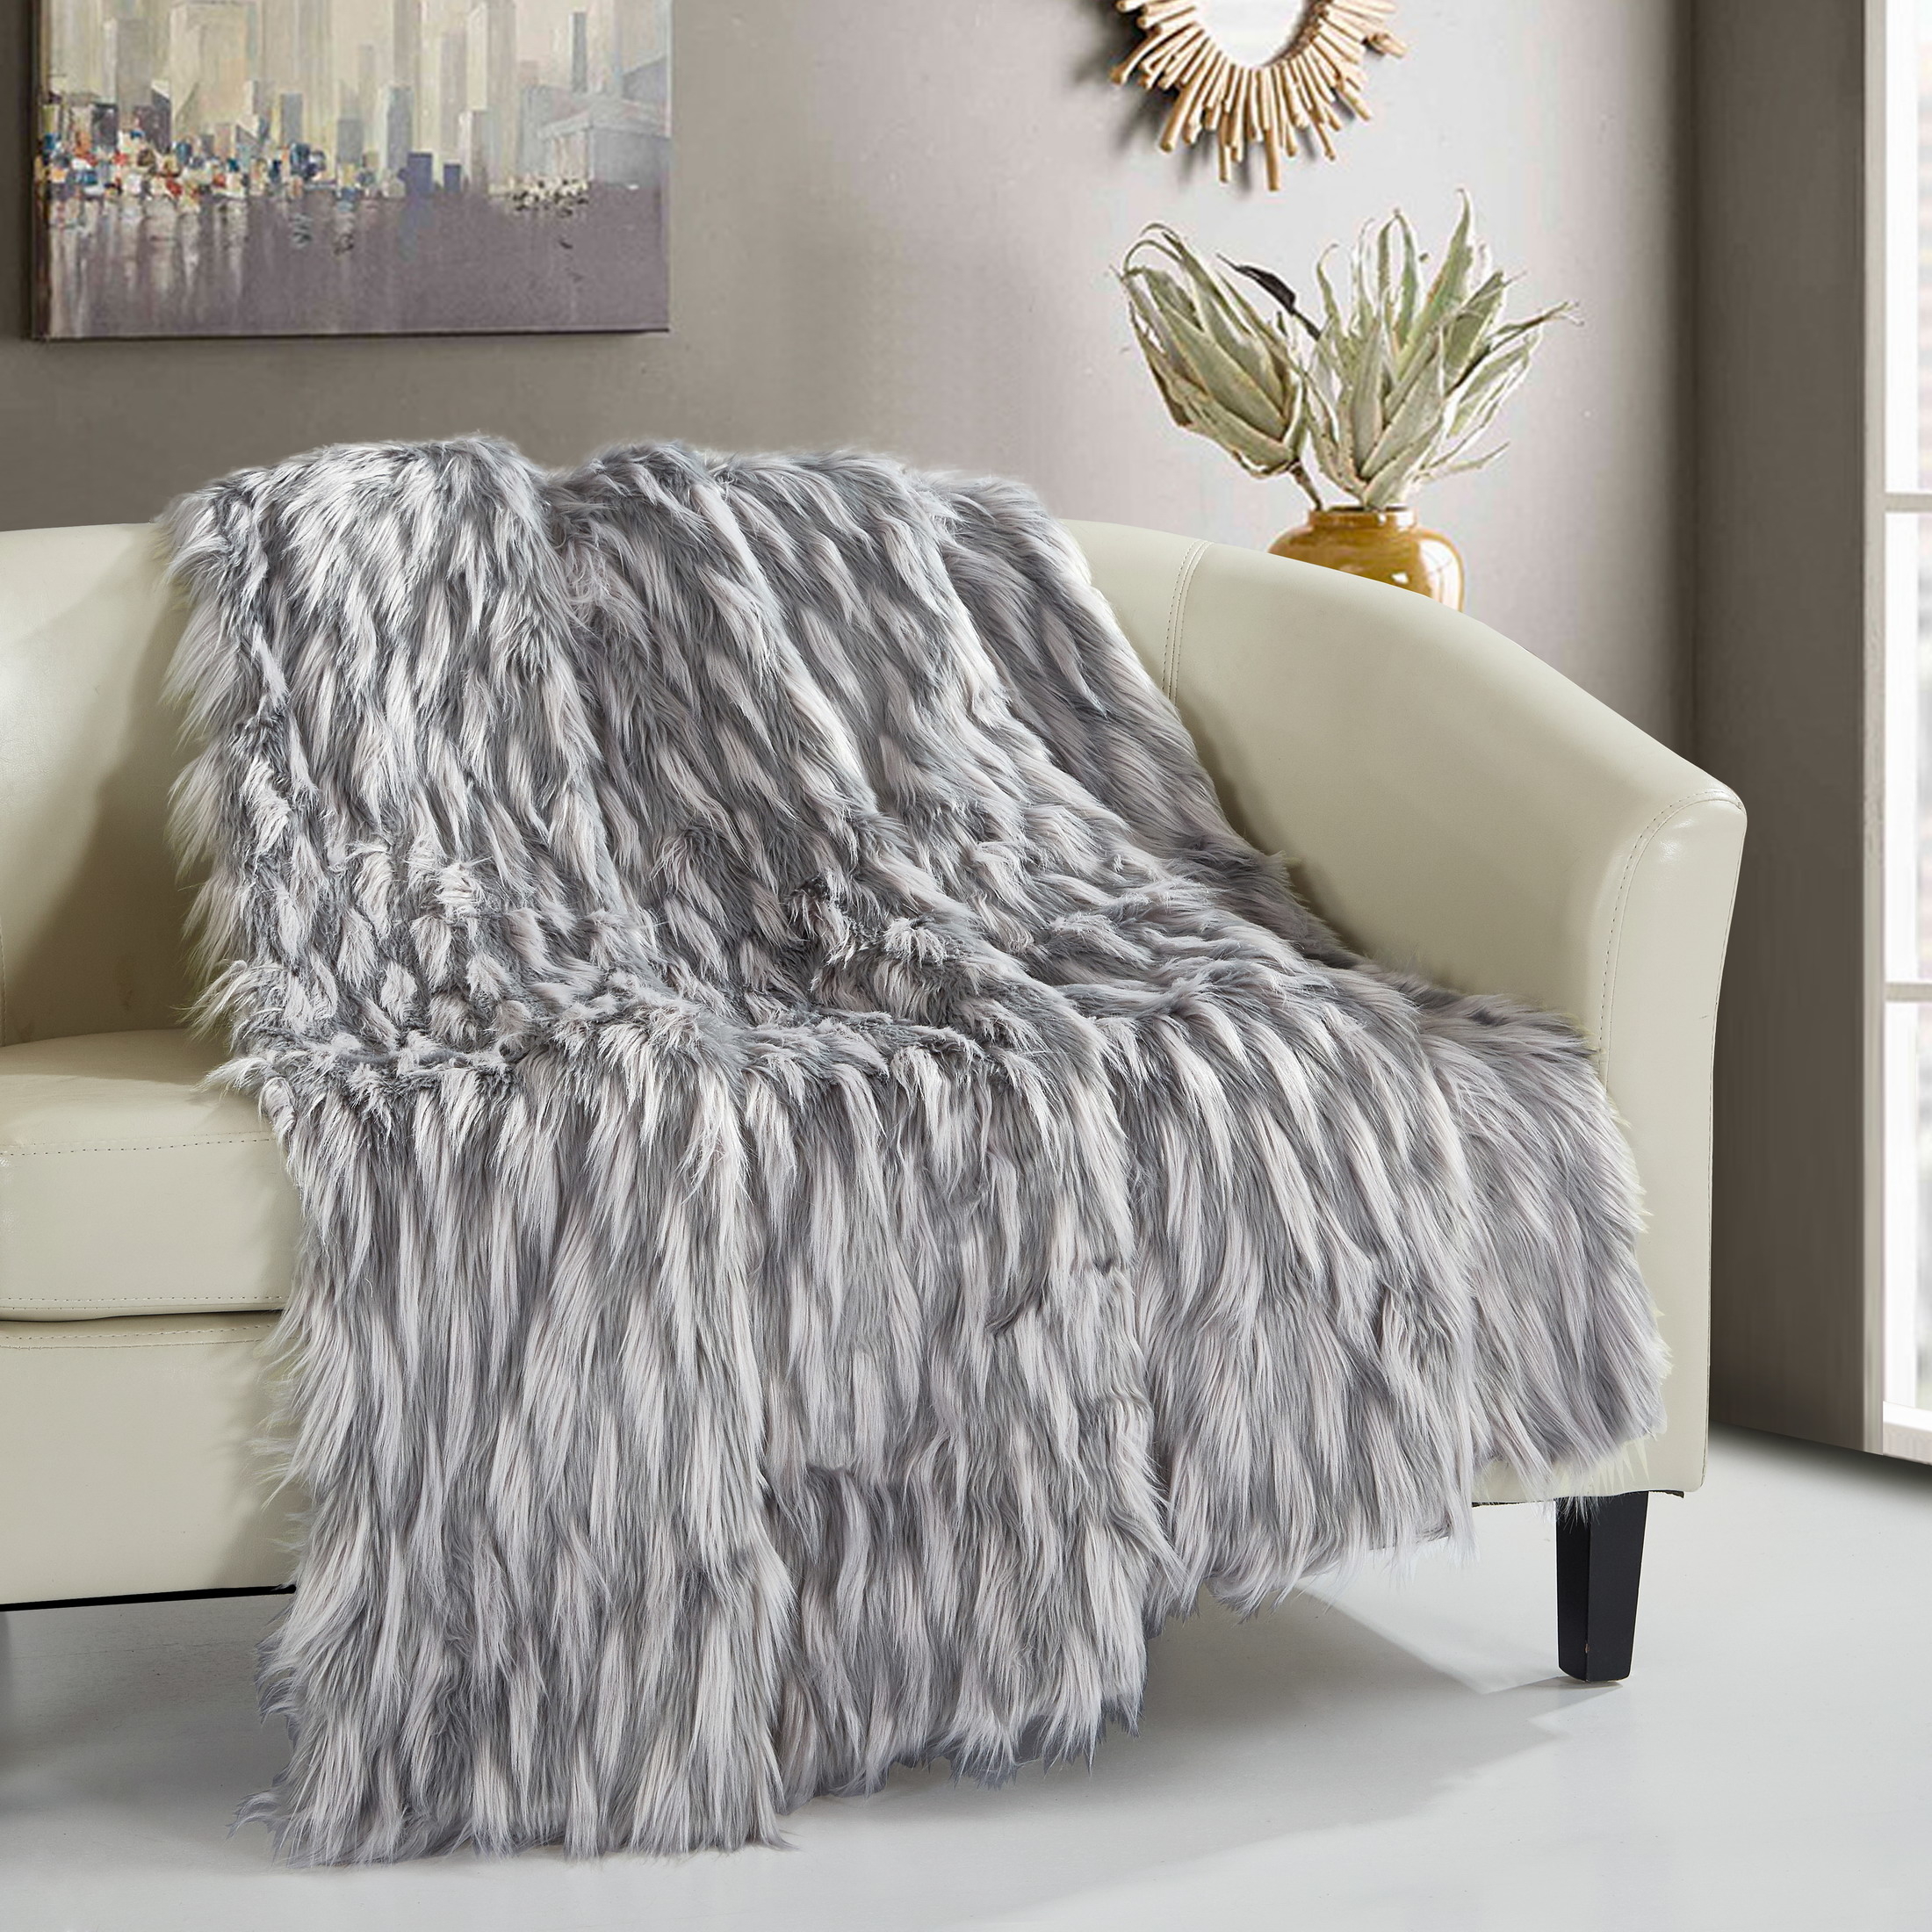 Levida Throw Blanket Super Soft Ultra Plush Micromink Backing Decorative Two-Tone Design - Beige